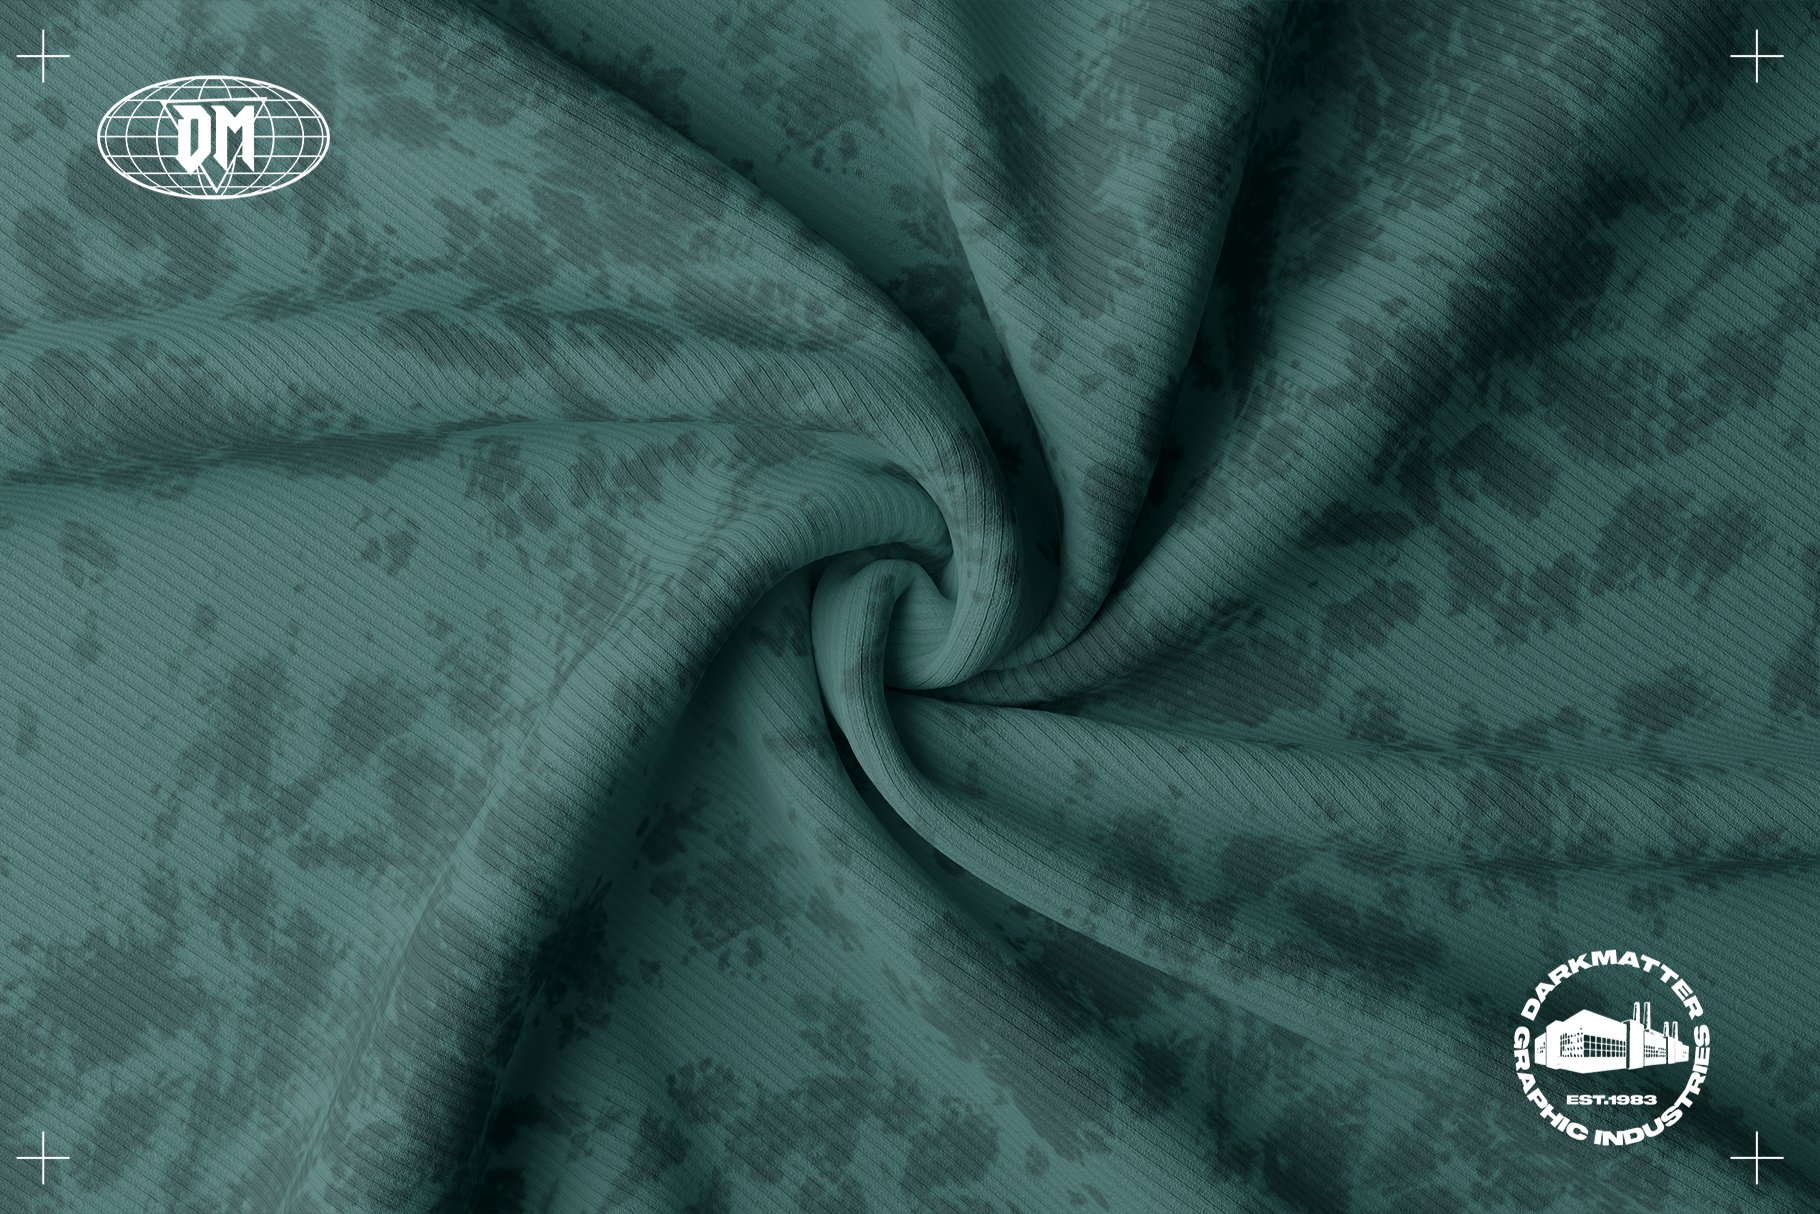 Seamless Tie Dye Pattern Bundle cover image.